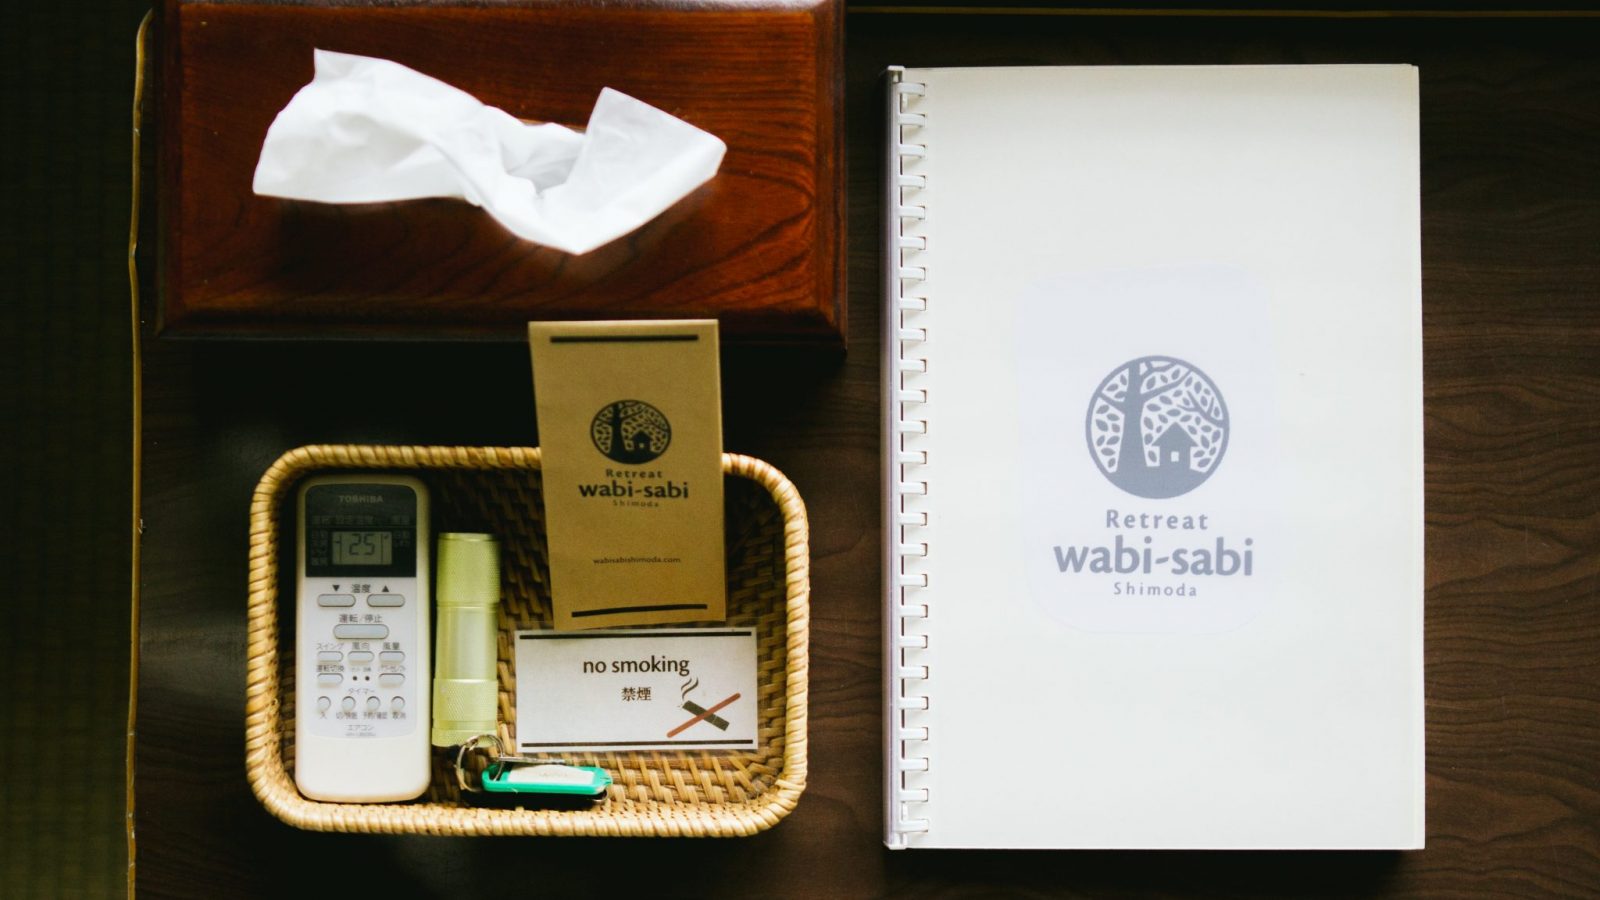 Retreat wabi-sabi guestroom supplies